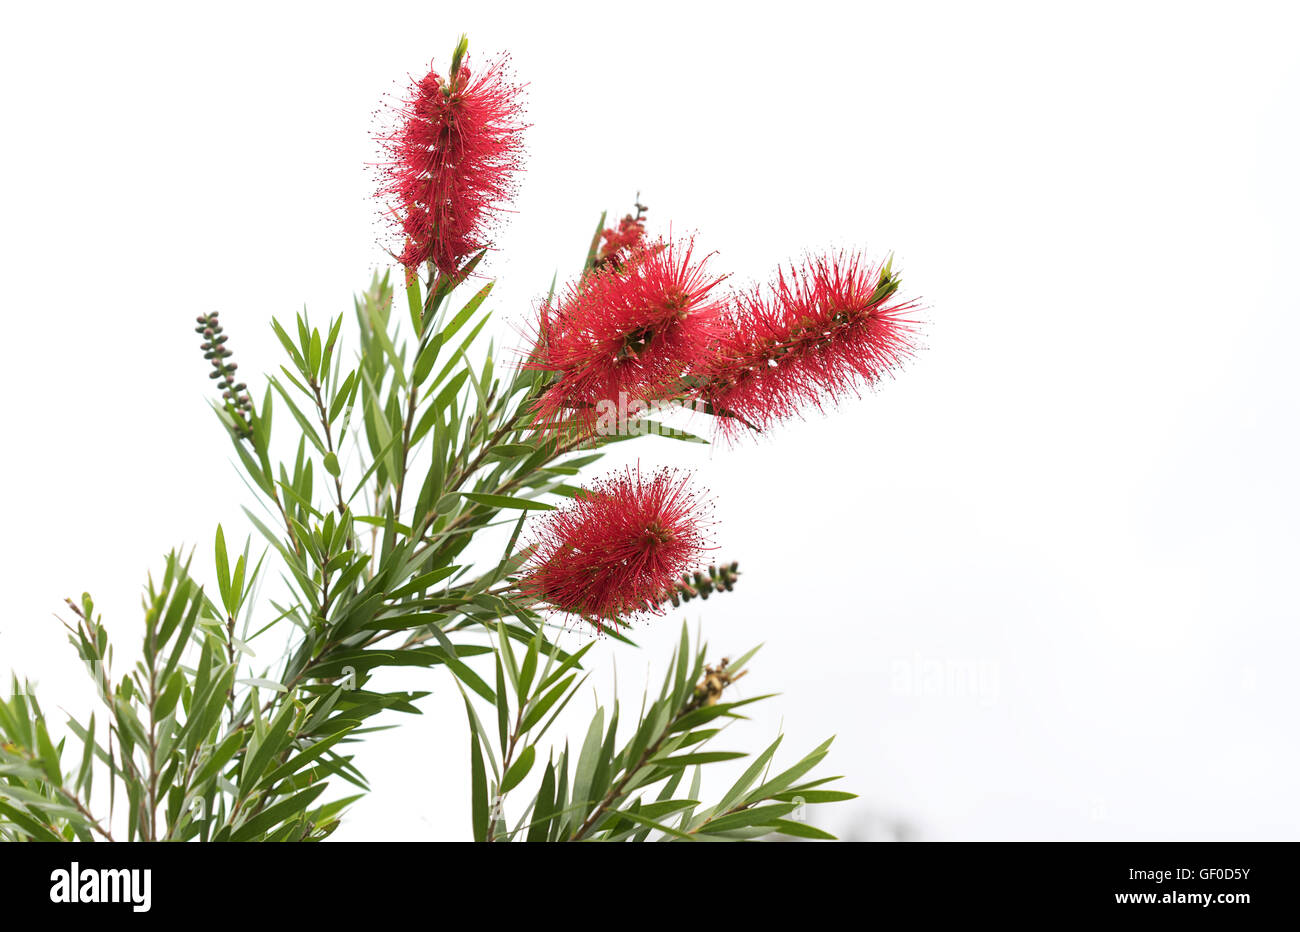 Australian native Bottlebrush, natural Callistemon flowers with green foliage Stock Photo